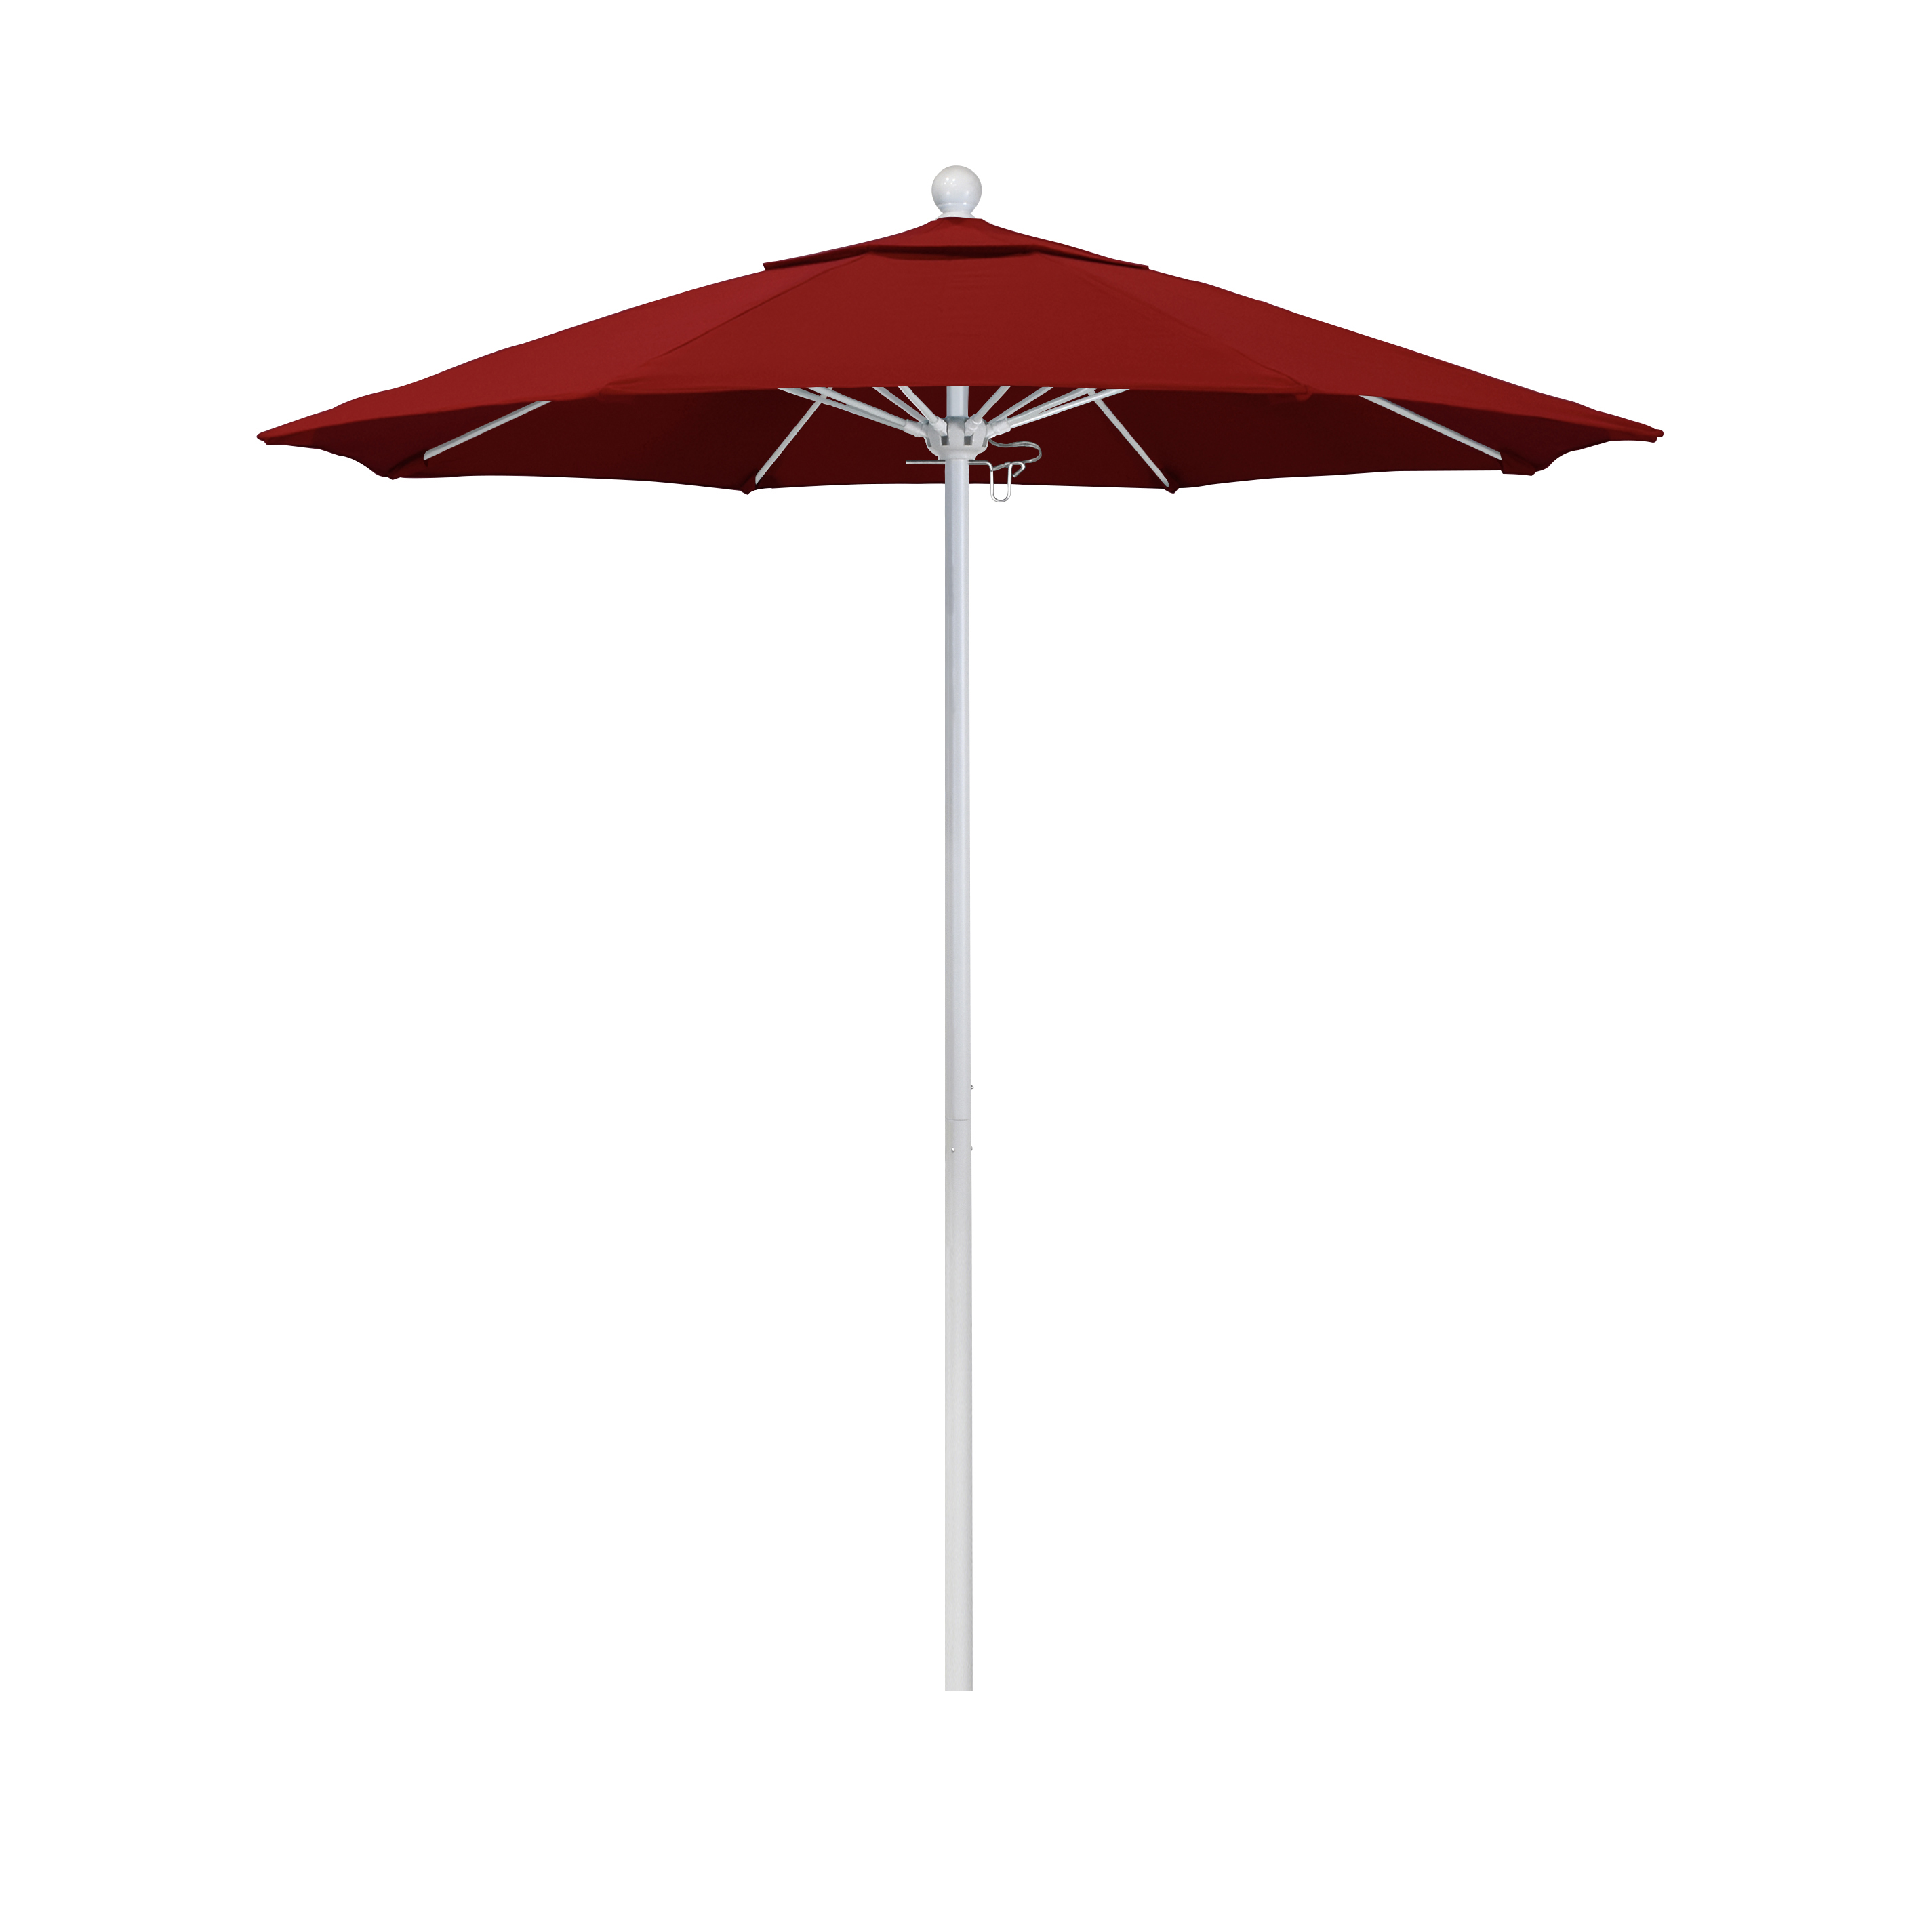 Alto758170-5403 7.5 Ft. Fiberglass Pulley Open Market Umbrella - Matted White And Sunbrella-jockey Red